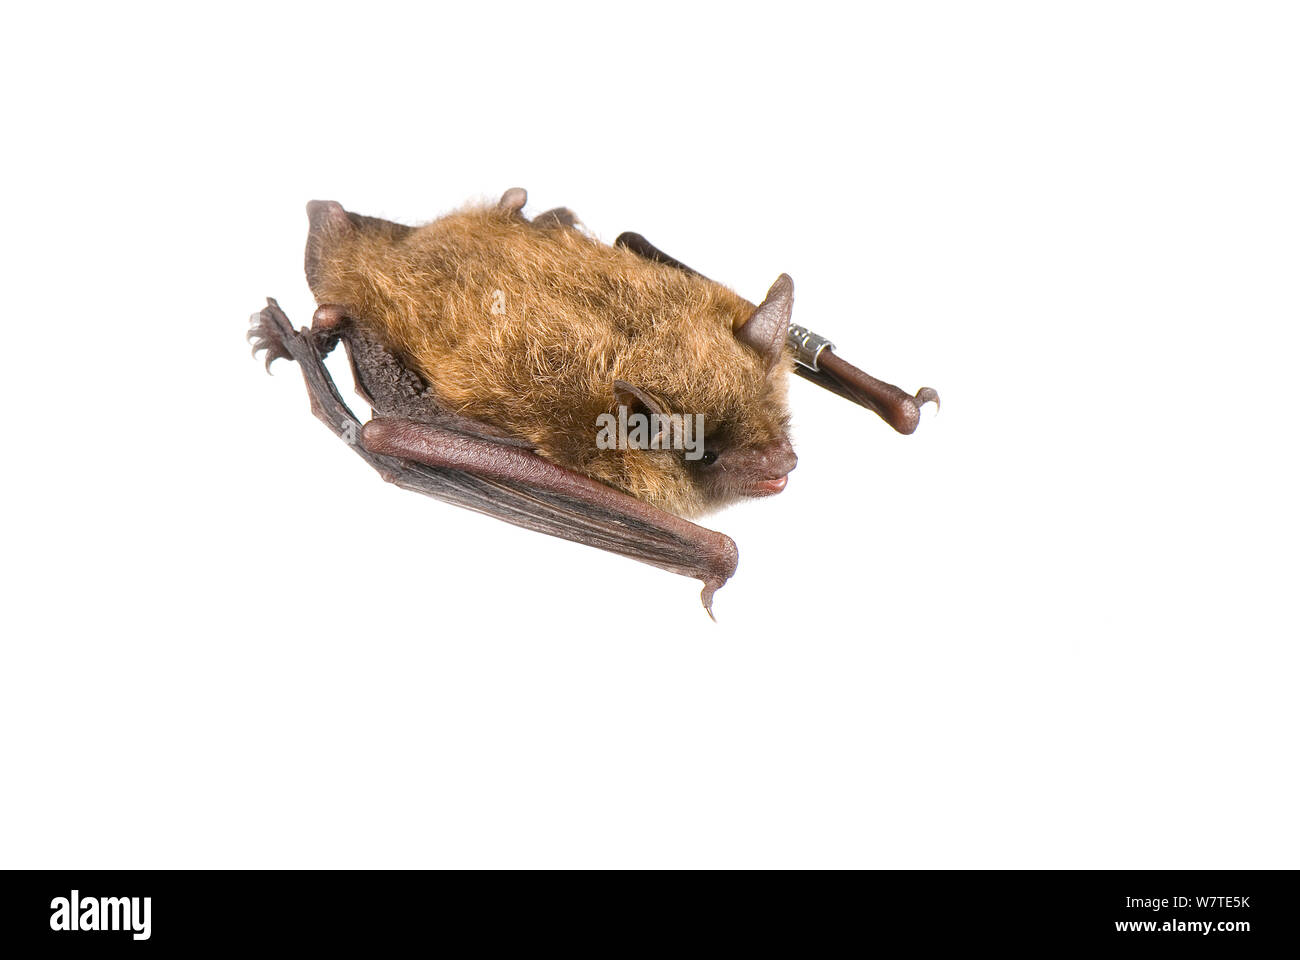 Little Brown Bat (Myotis lucifugus) Ohio, USA, Juli. Meetyourneighbors.net Projekt. Stockfoto